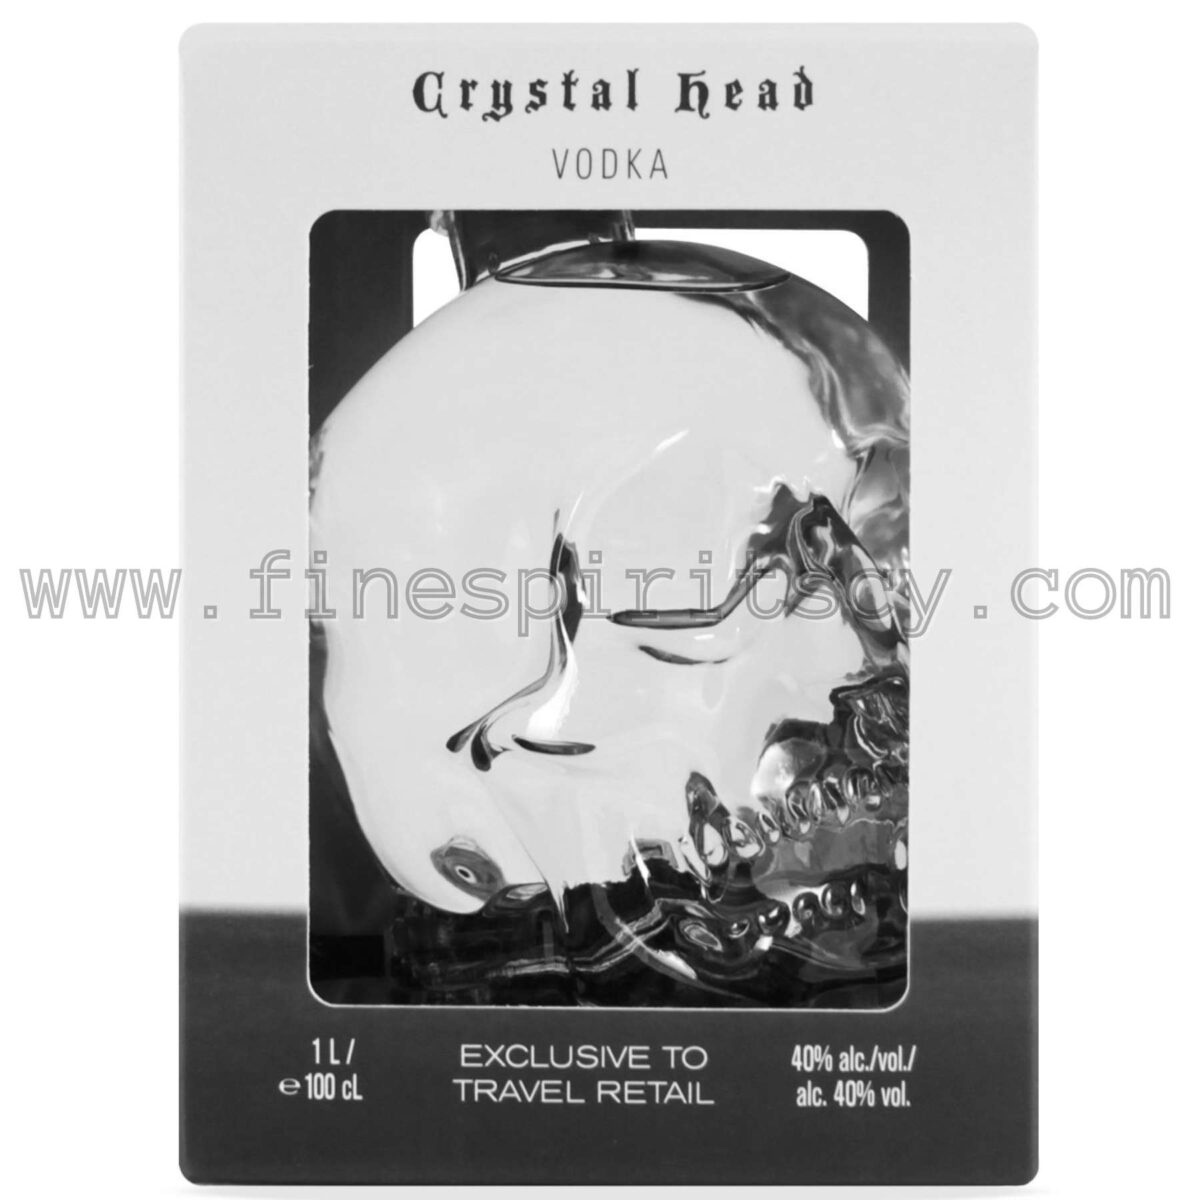 Crystal Head Original Vodka 1000ml 100cl 1L Liter Litre Travel Retail Exclusive Price Cyprus